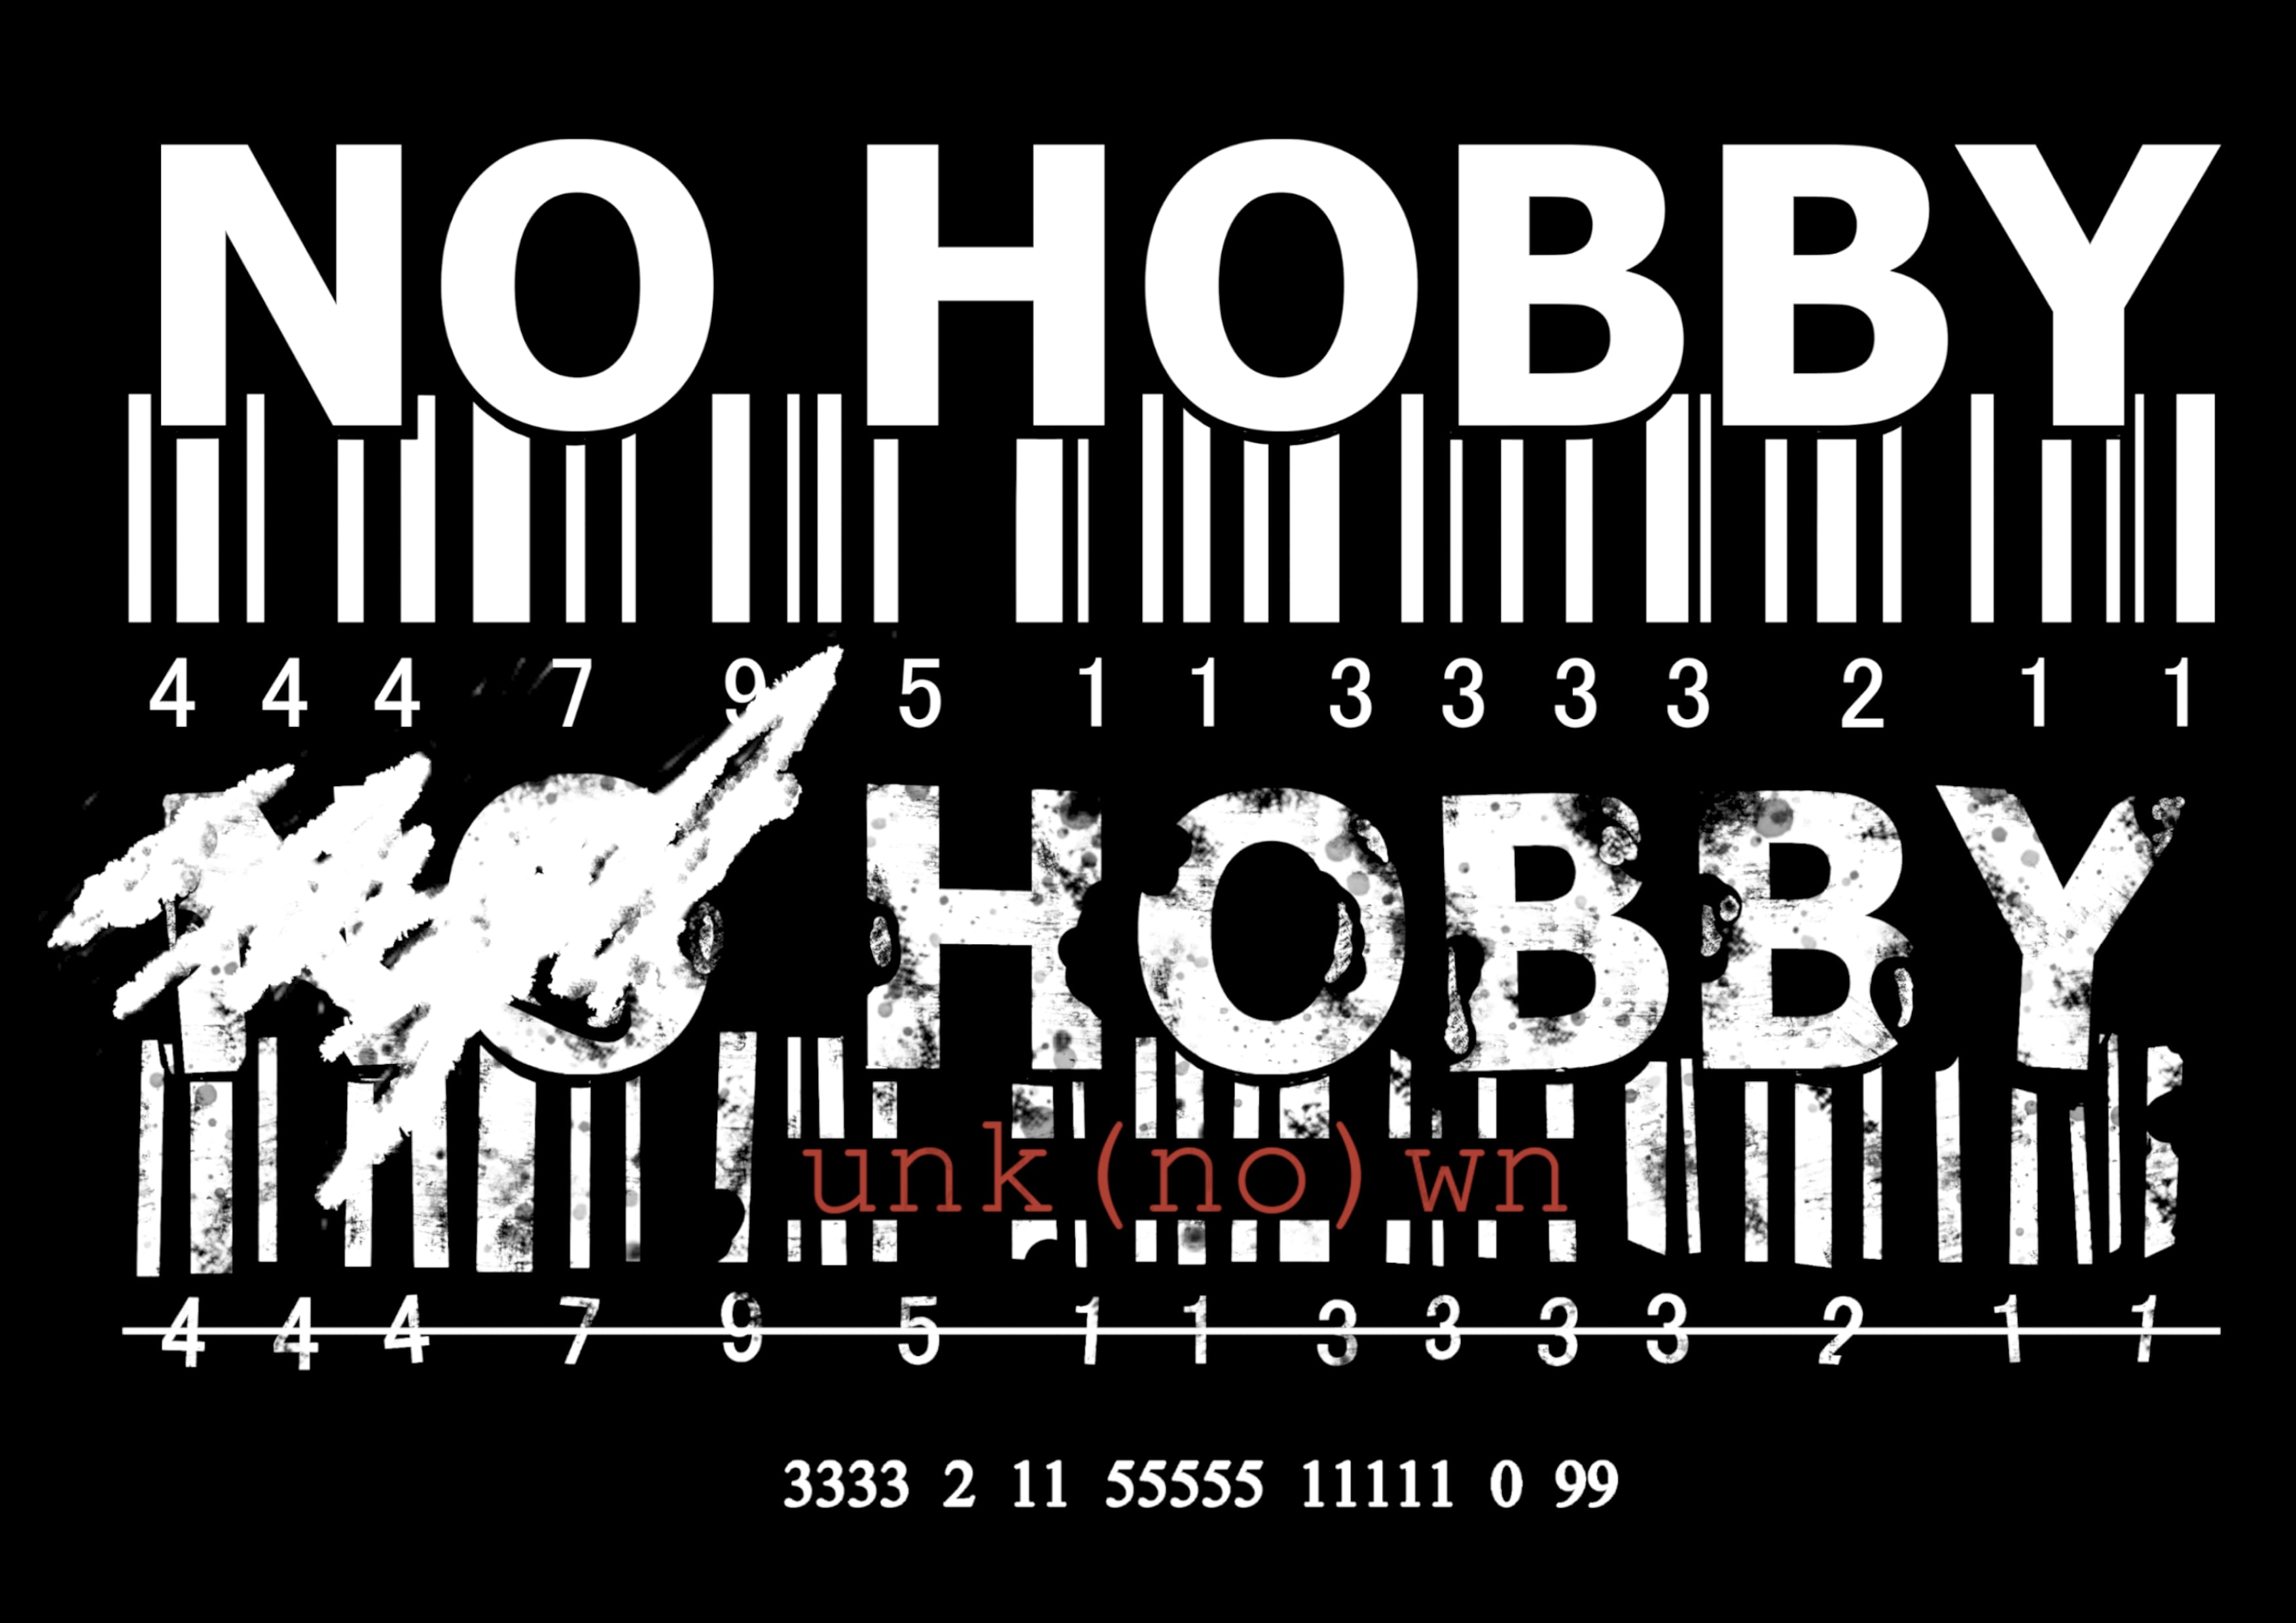 NO HOBBY_unk(no)wn hobby